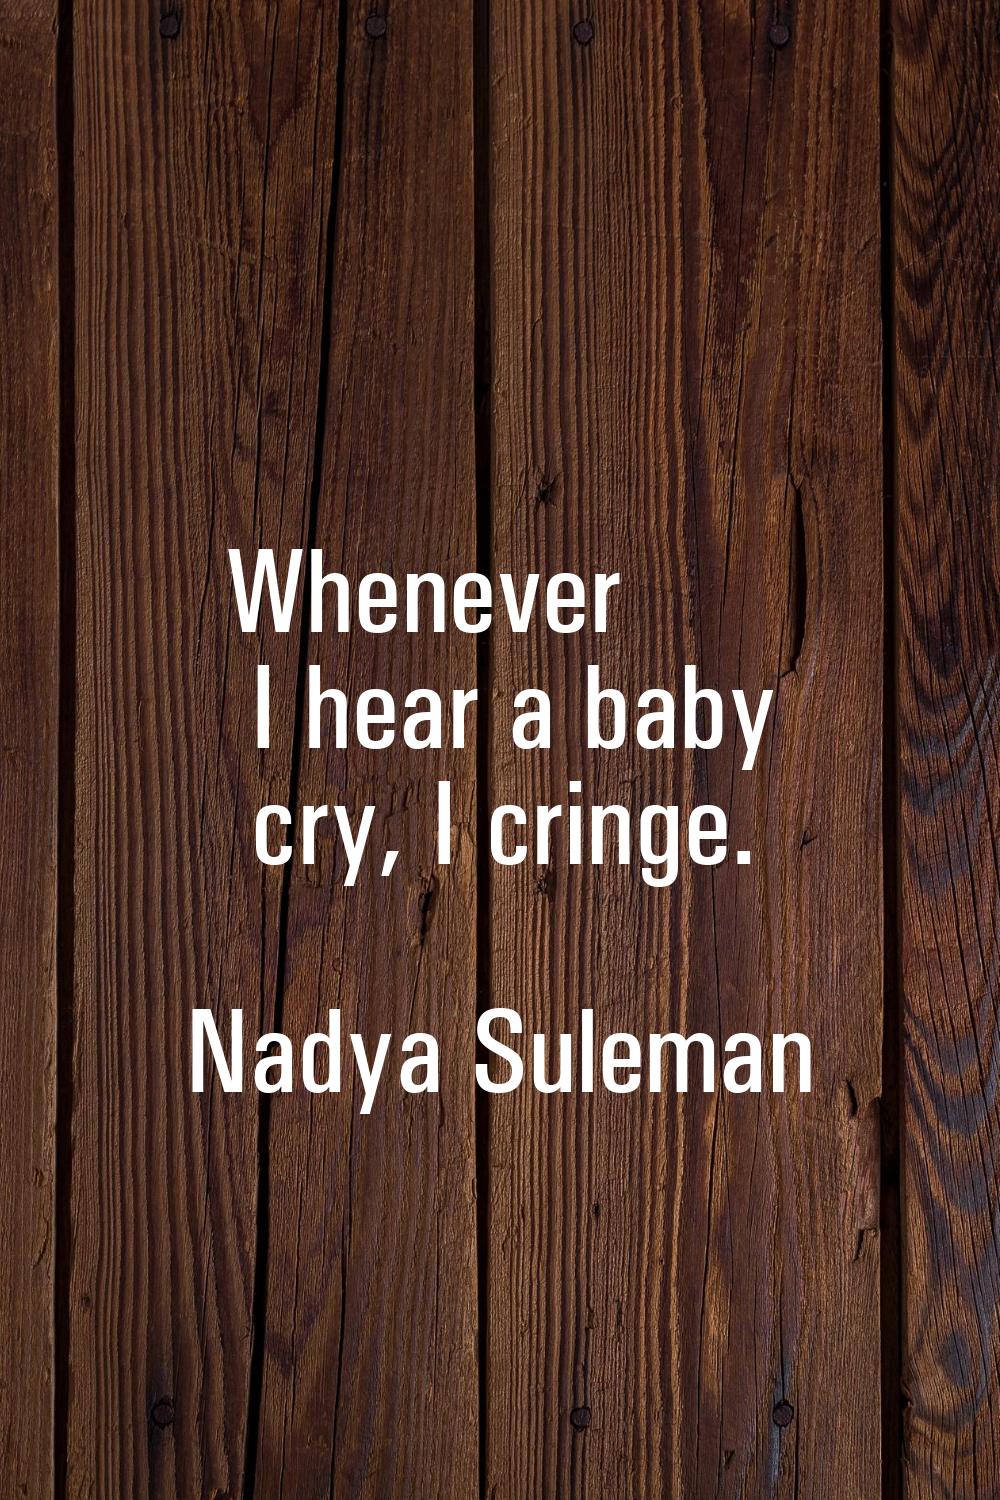 Whenever I hear a baby cry, I cringe.